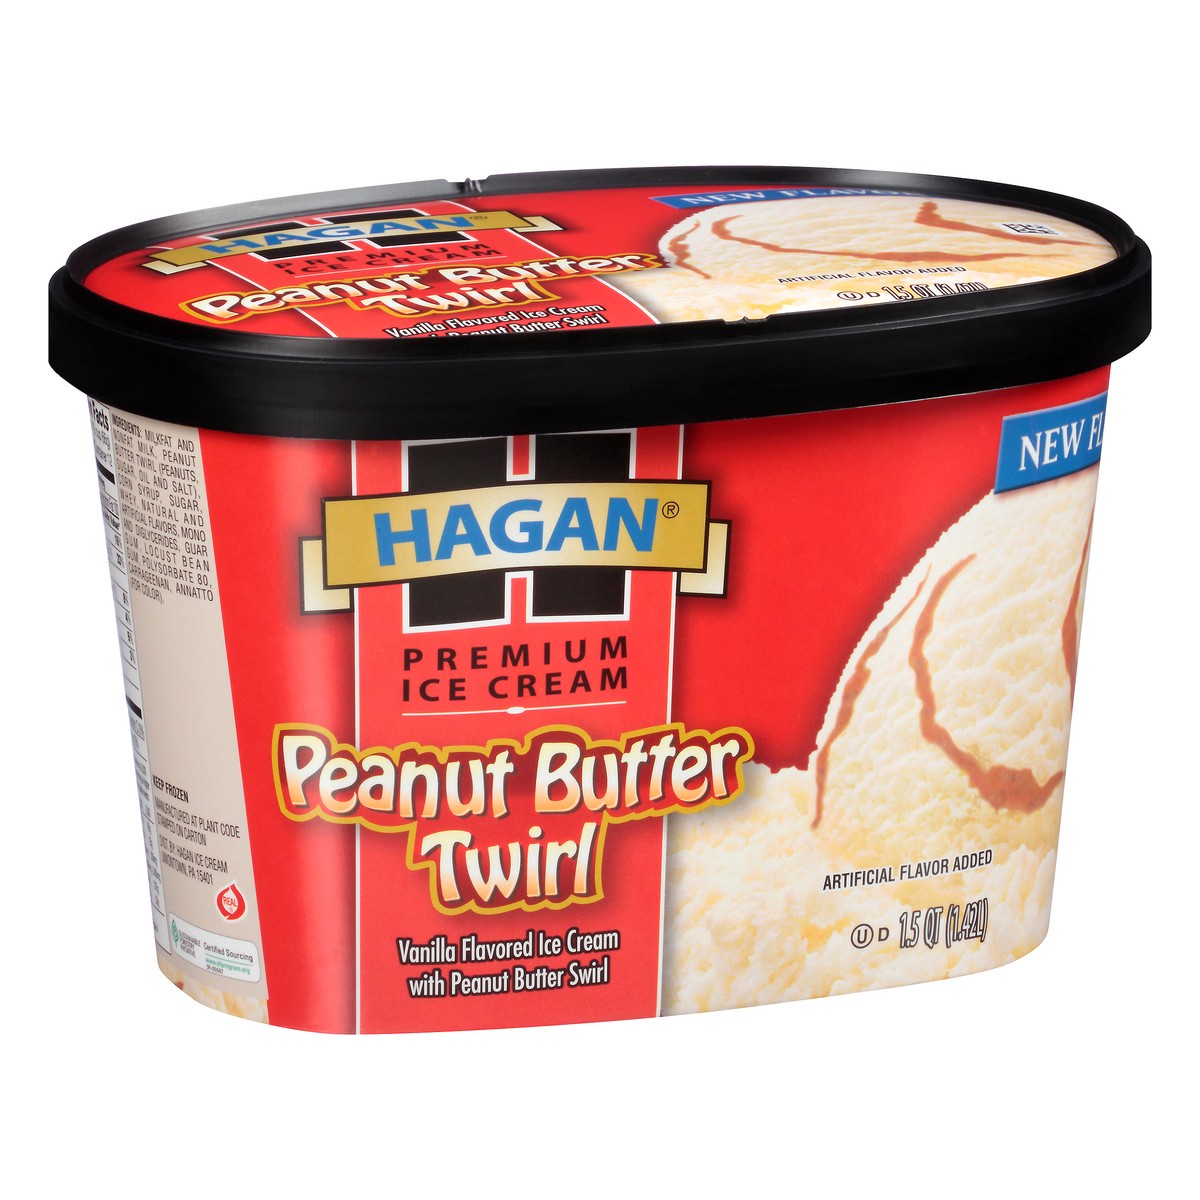 slide 10 of 10, Hagan Premium Ice Cream Peanut Butter Twirl 1.5 qt. Tub, 1.42 liter